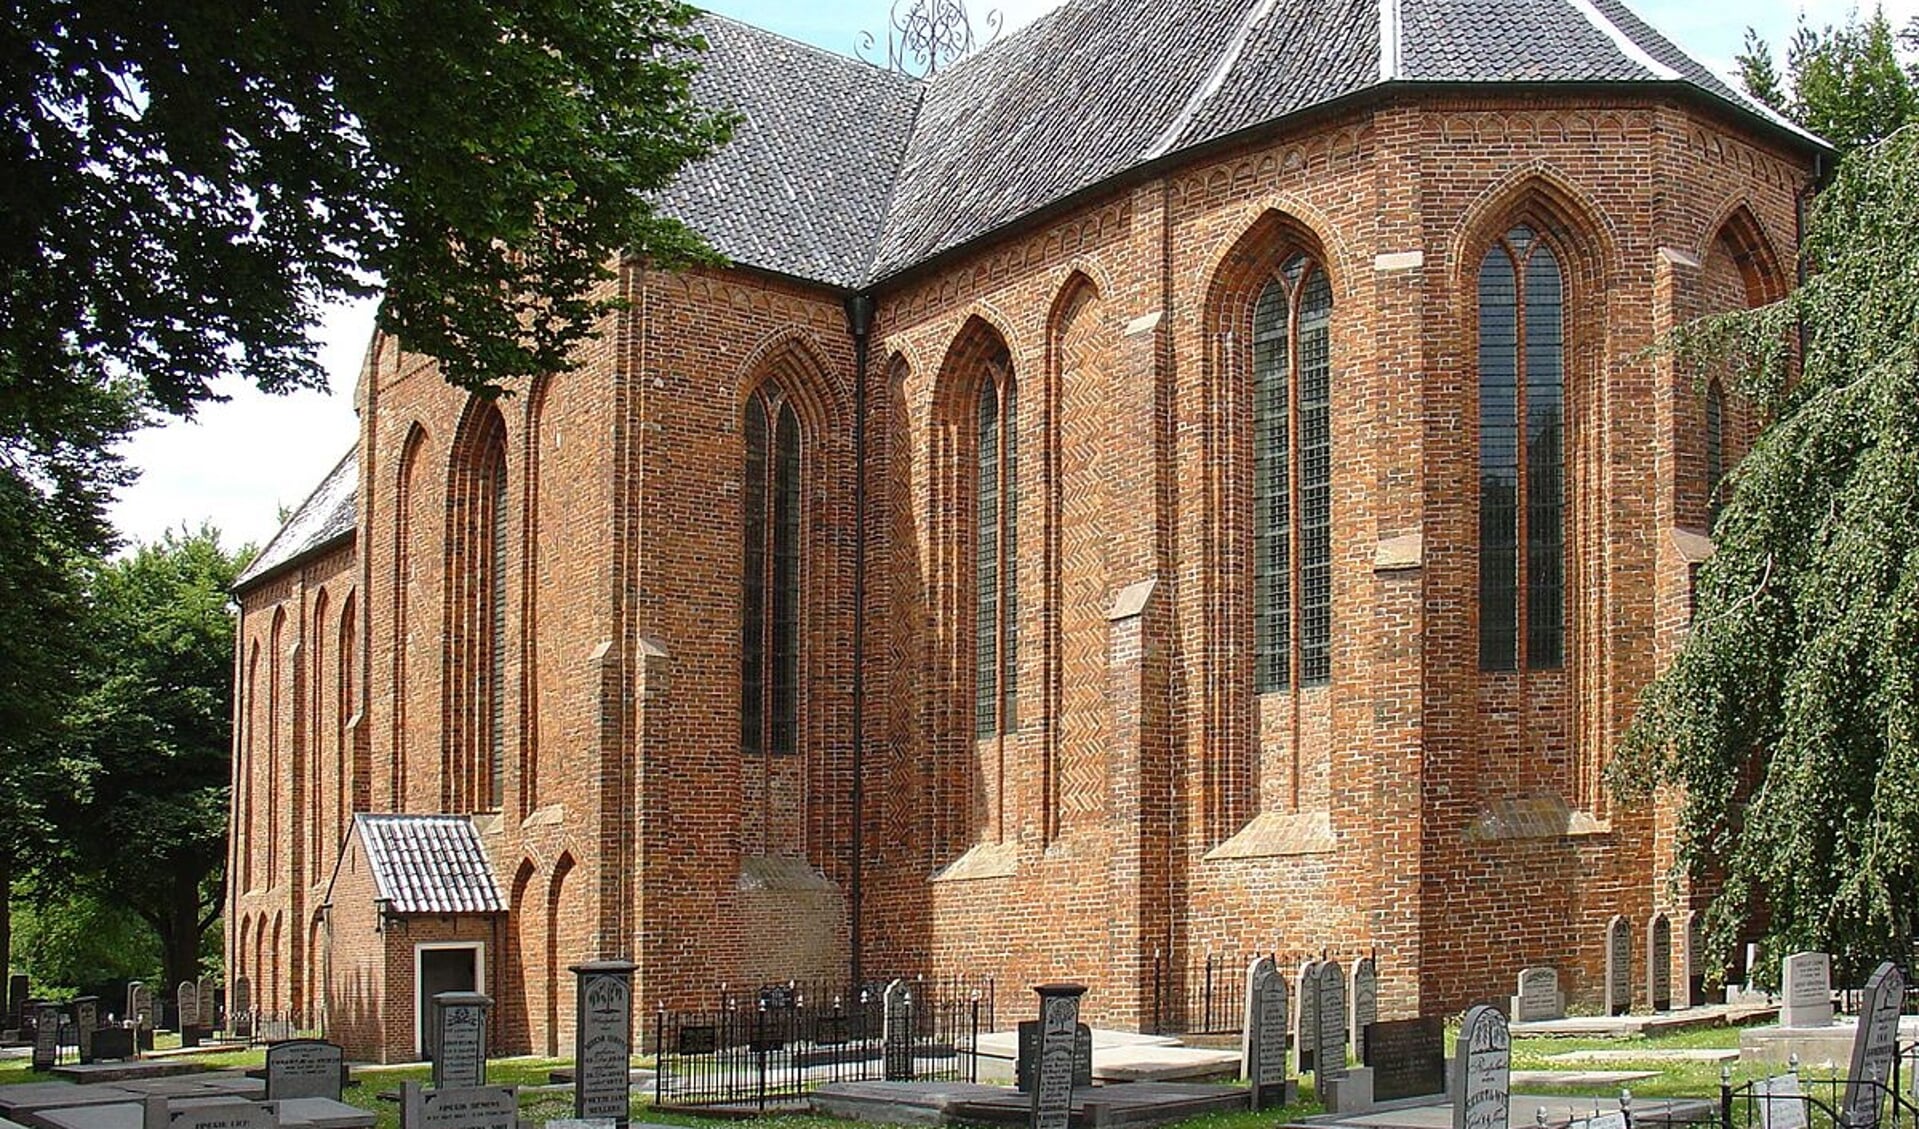 De route voert onder andere langs de imposante kerk van Noordbroek. 